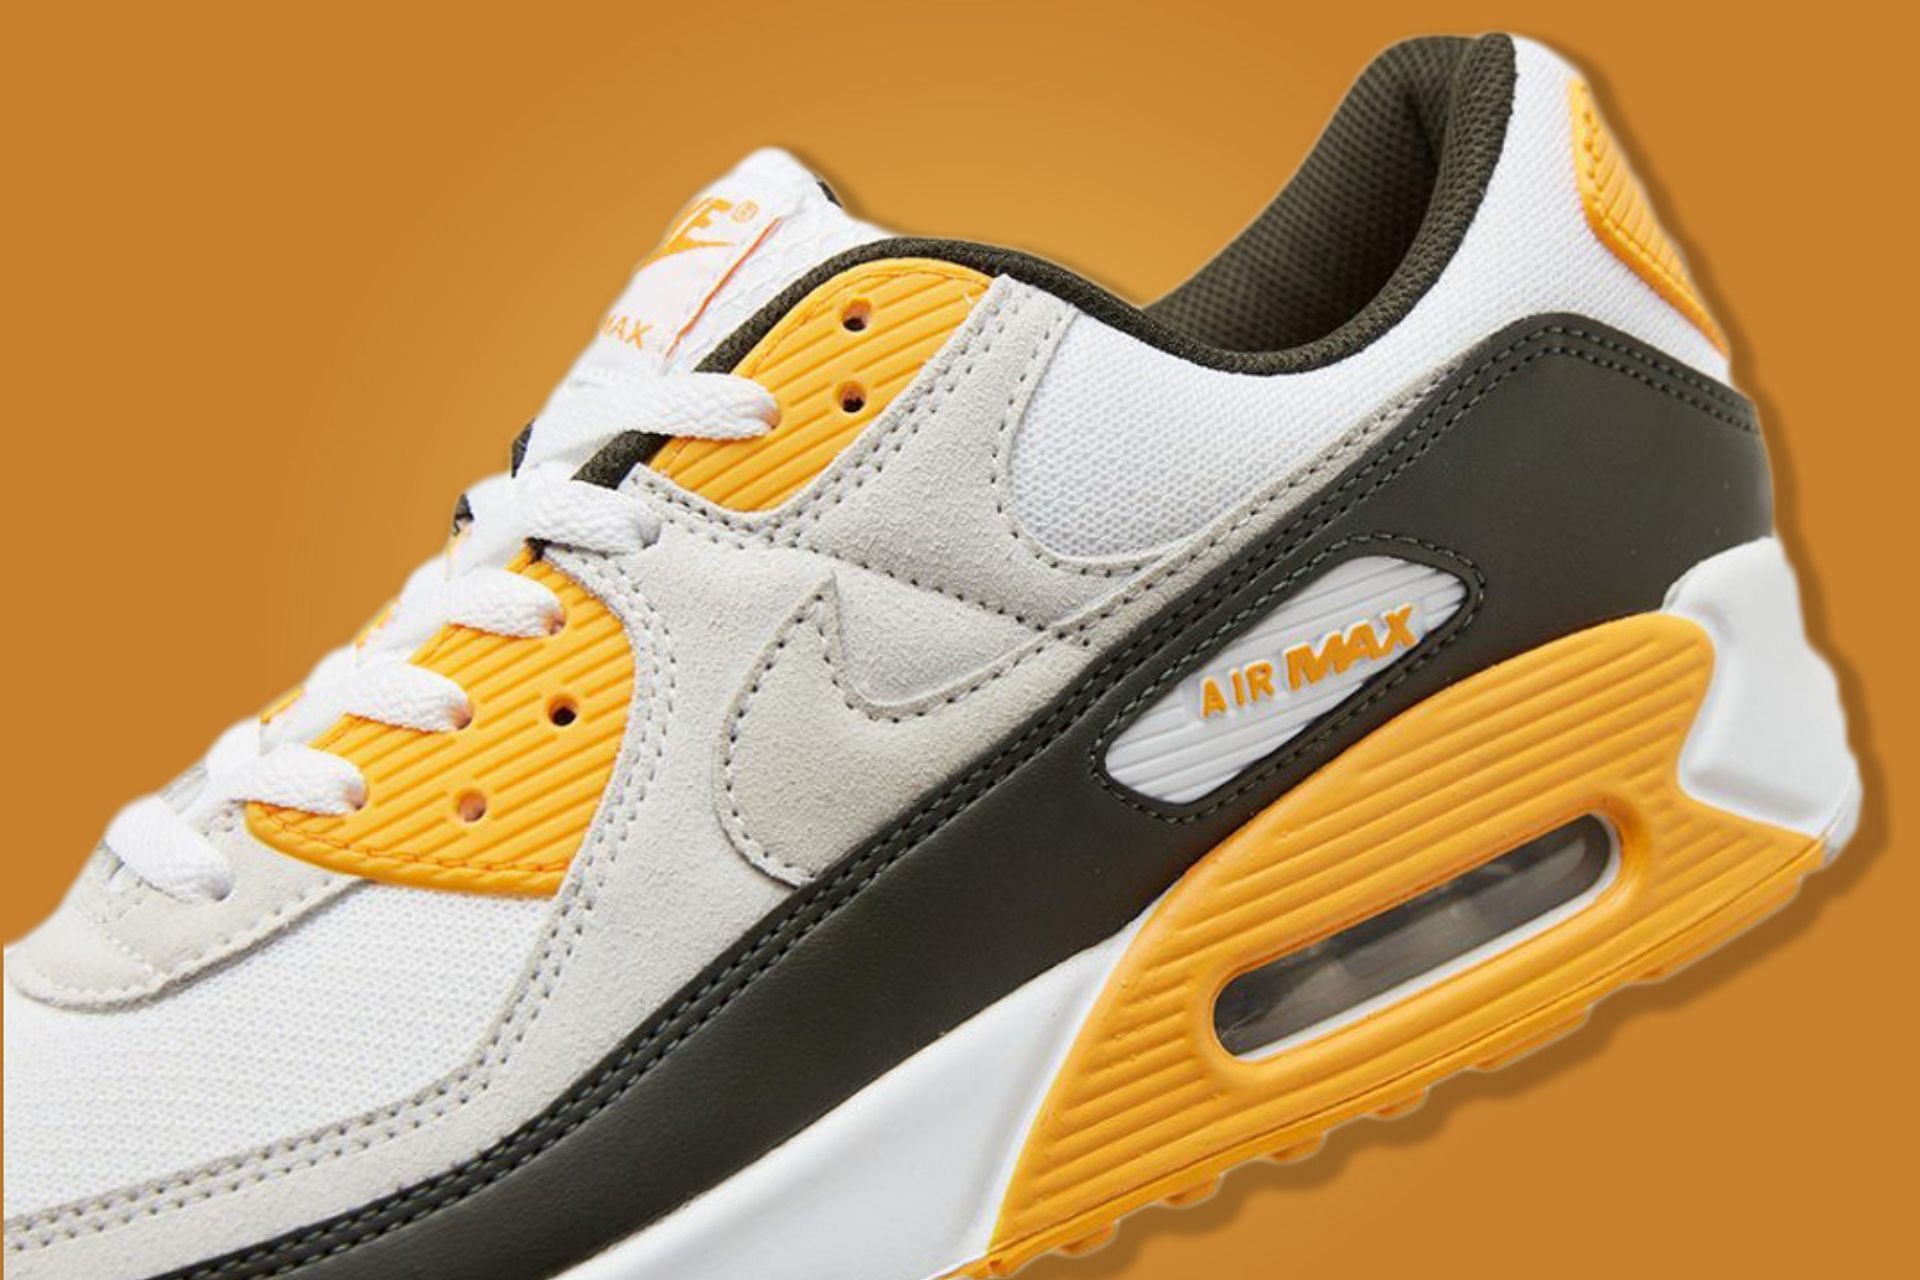 Nike Air Max 90 Laser Orange Baroque Brown sneakers (Image via Offspring)